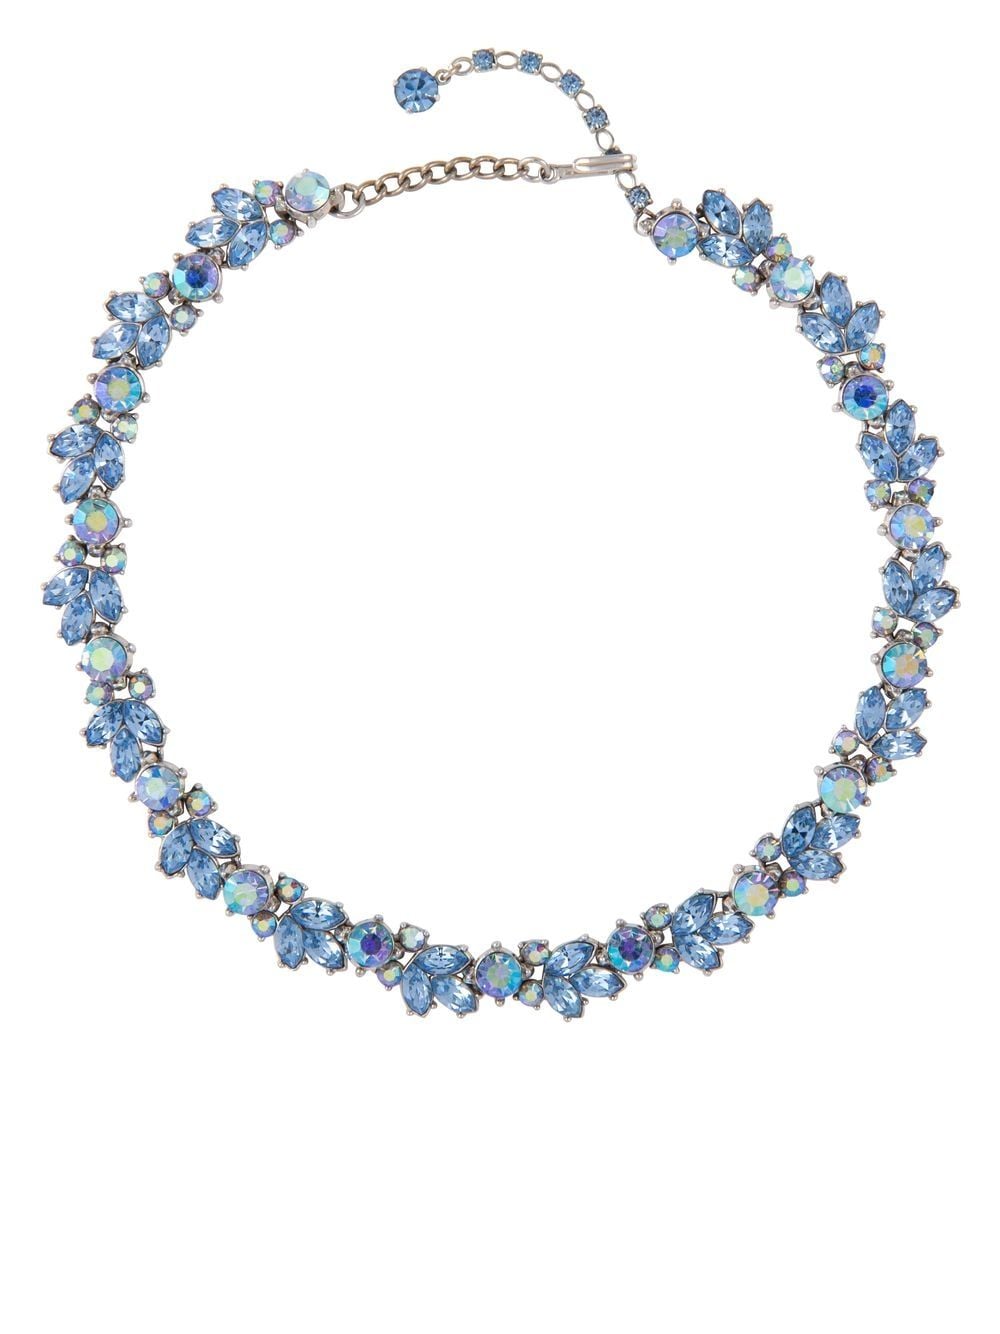 1950s Trifari crystal-embellished necklace